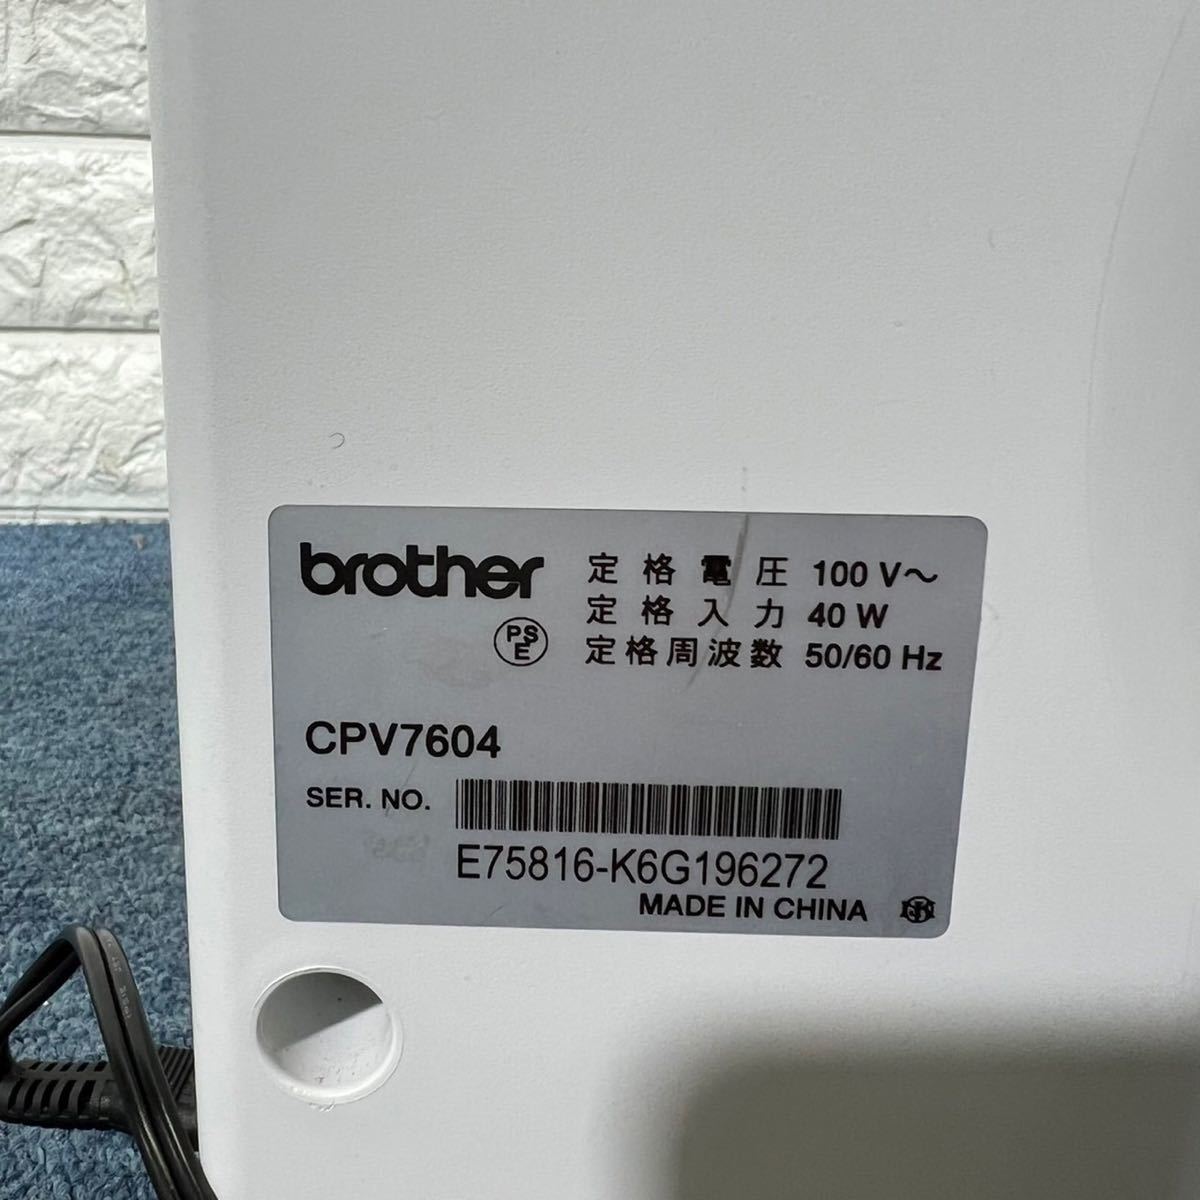 brother ブラザー 家庭用コンピュータミシン A3500 CPV7604 家電 ミシン 手芸 ハンドメイド